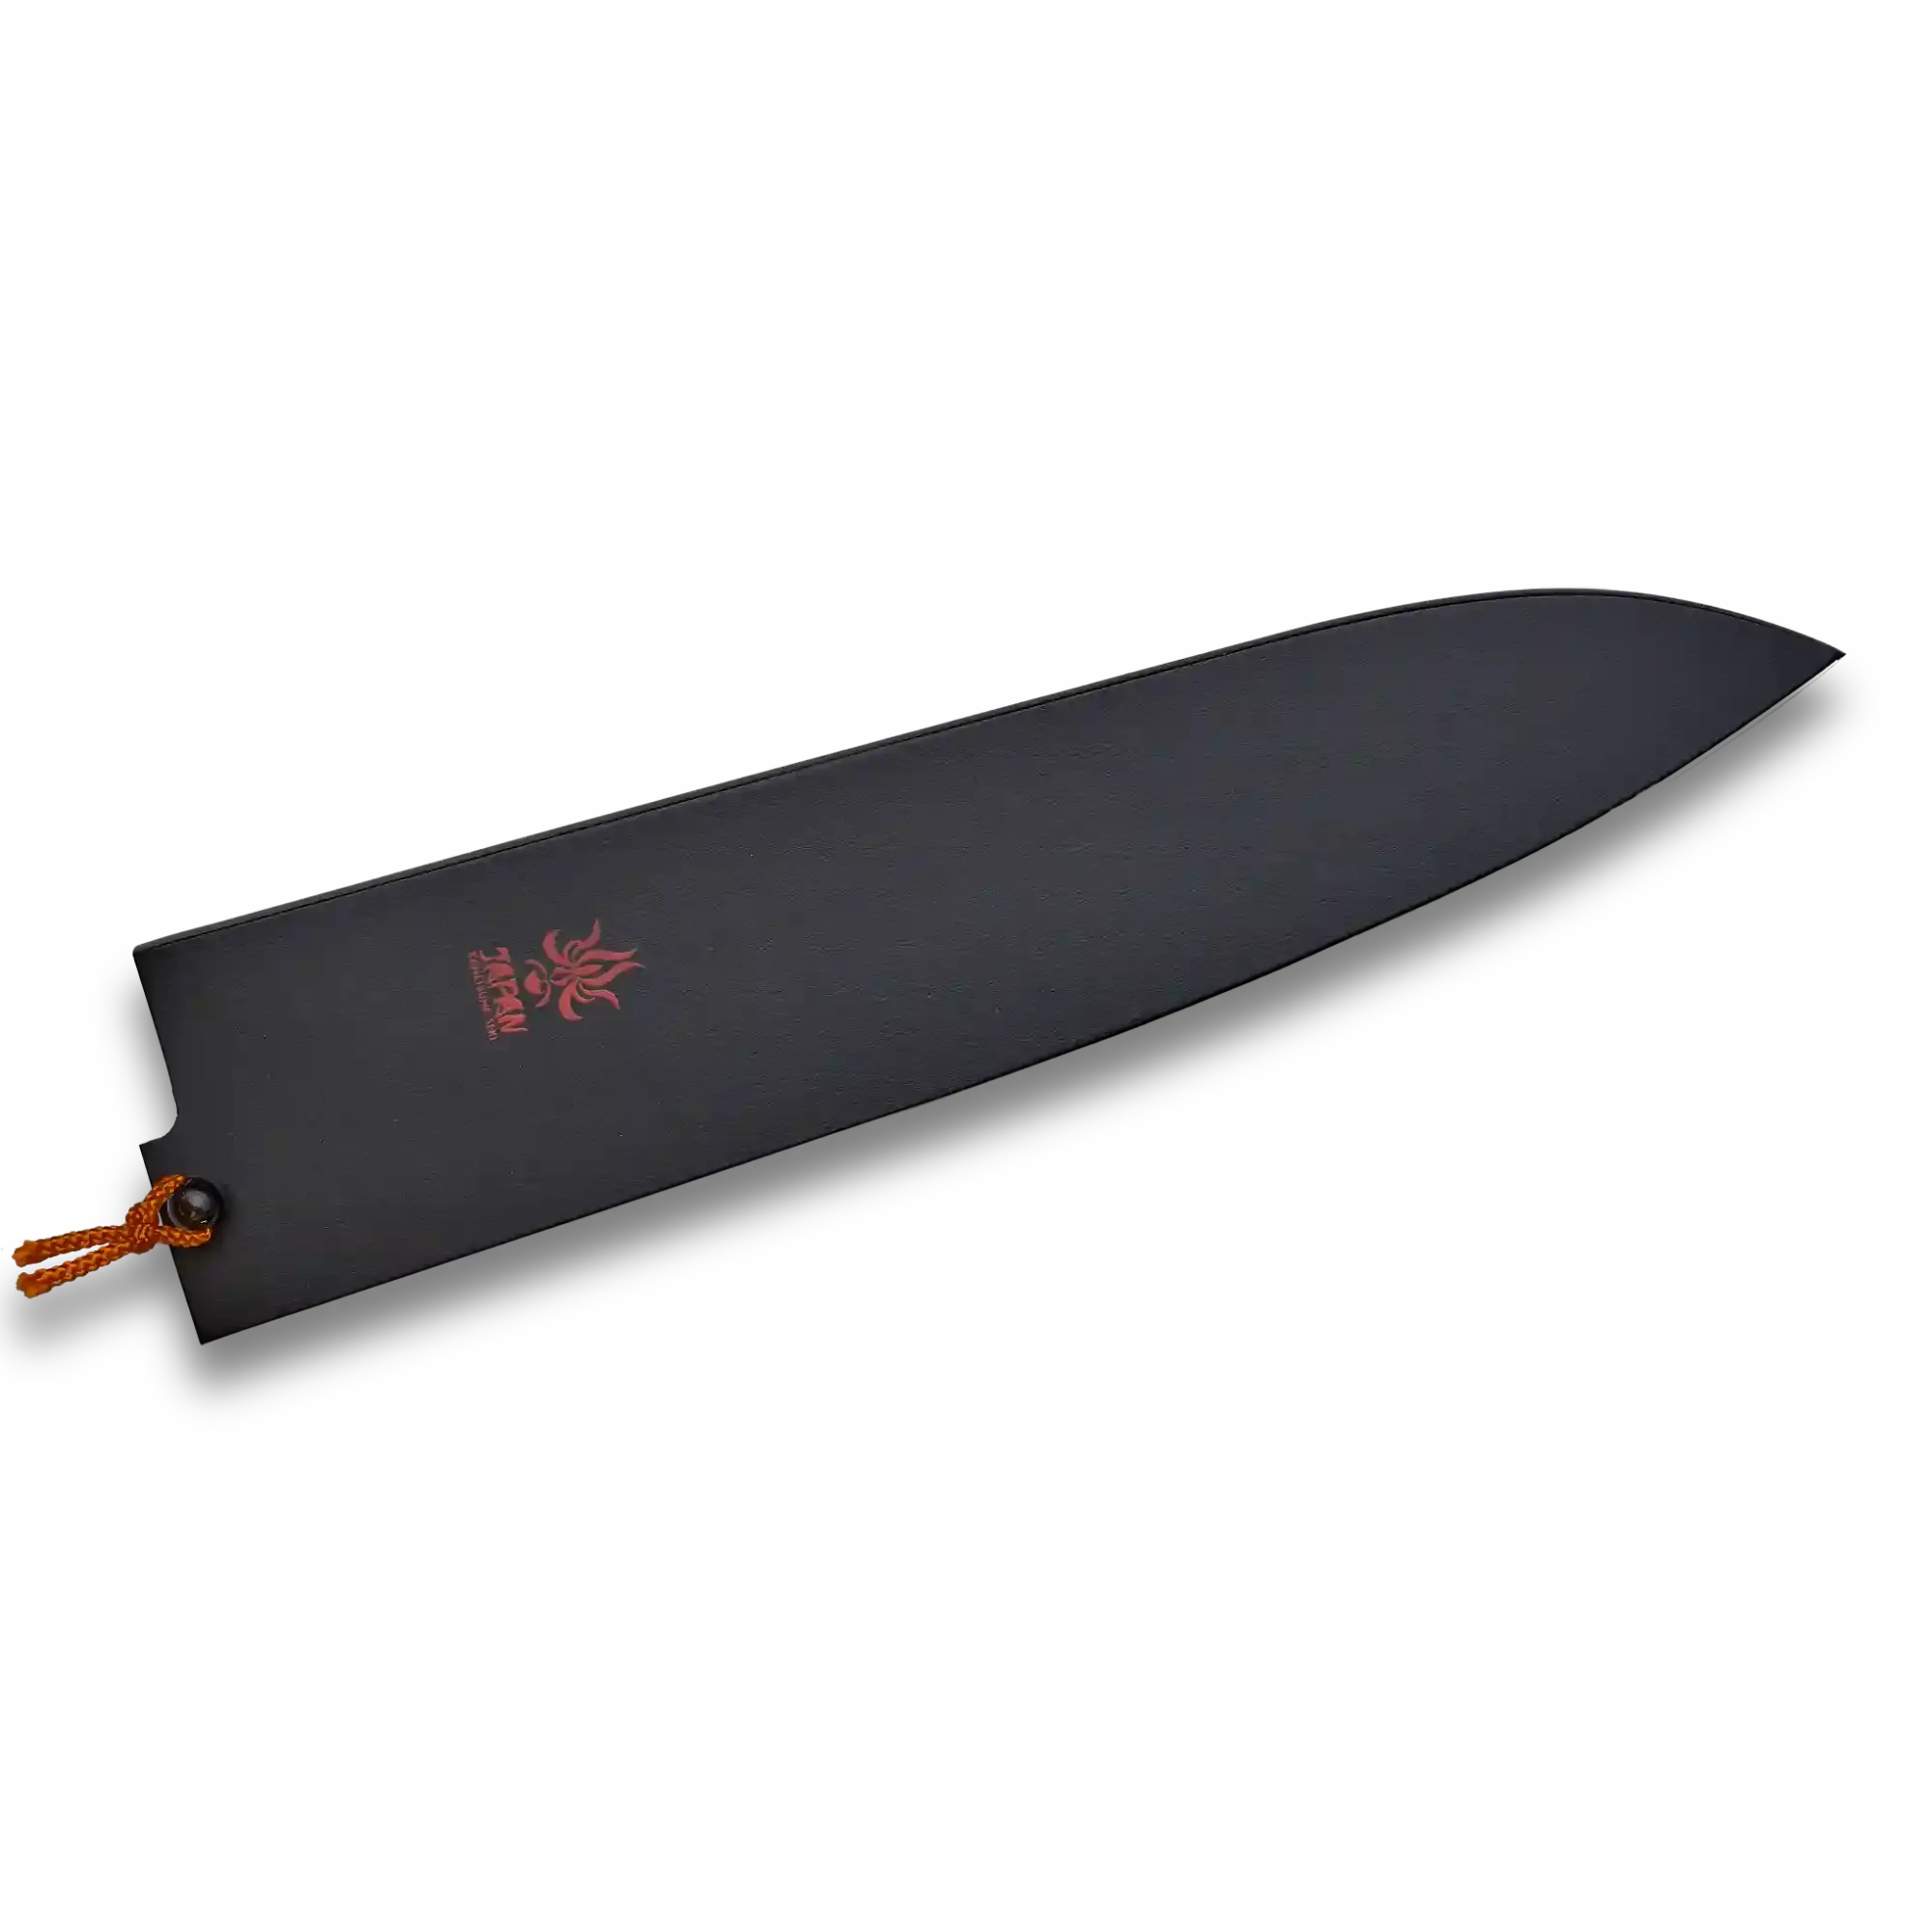 Sheath / Saya Ho Wood (Magnolia) - For Gyuto 240mm Knife